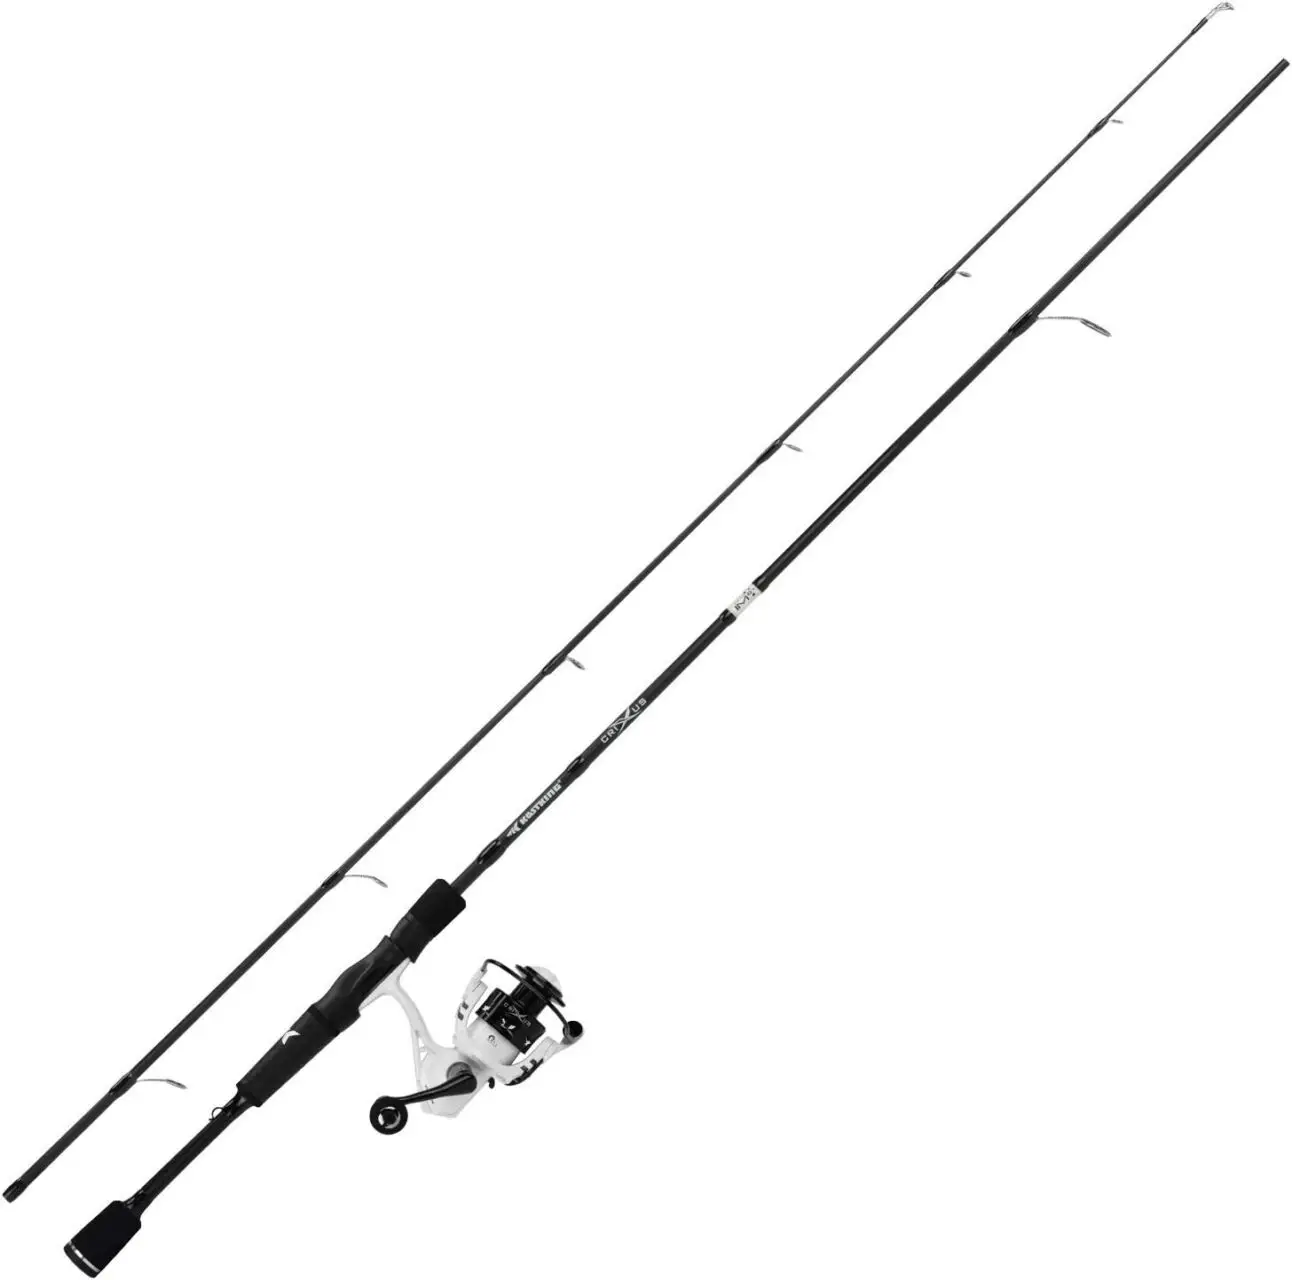 KastKing Crixus Beginner Fishing Rod and Reel Combo